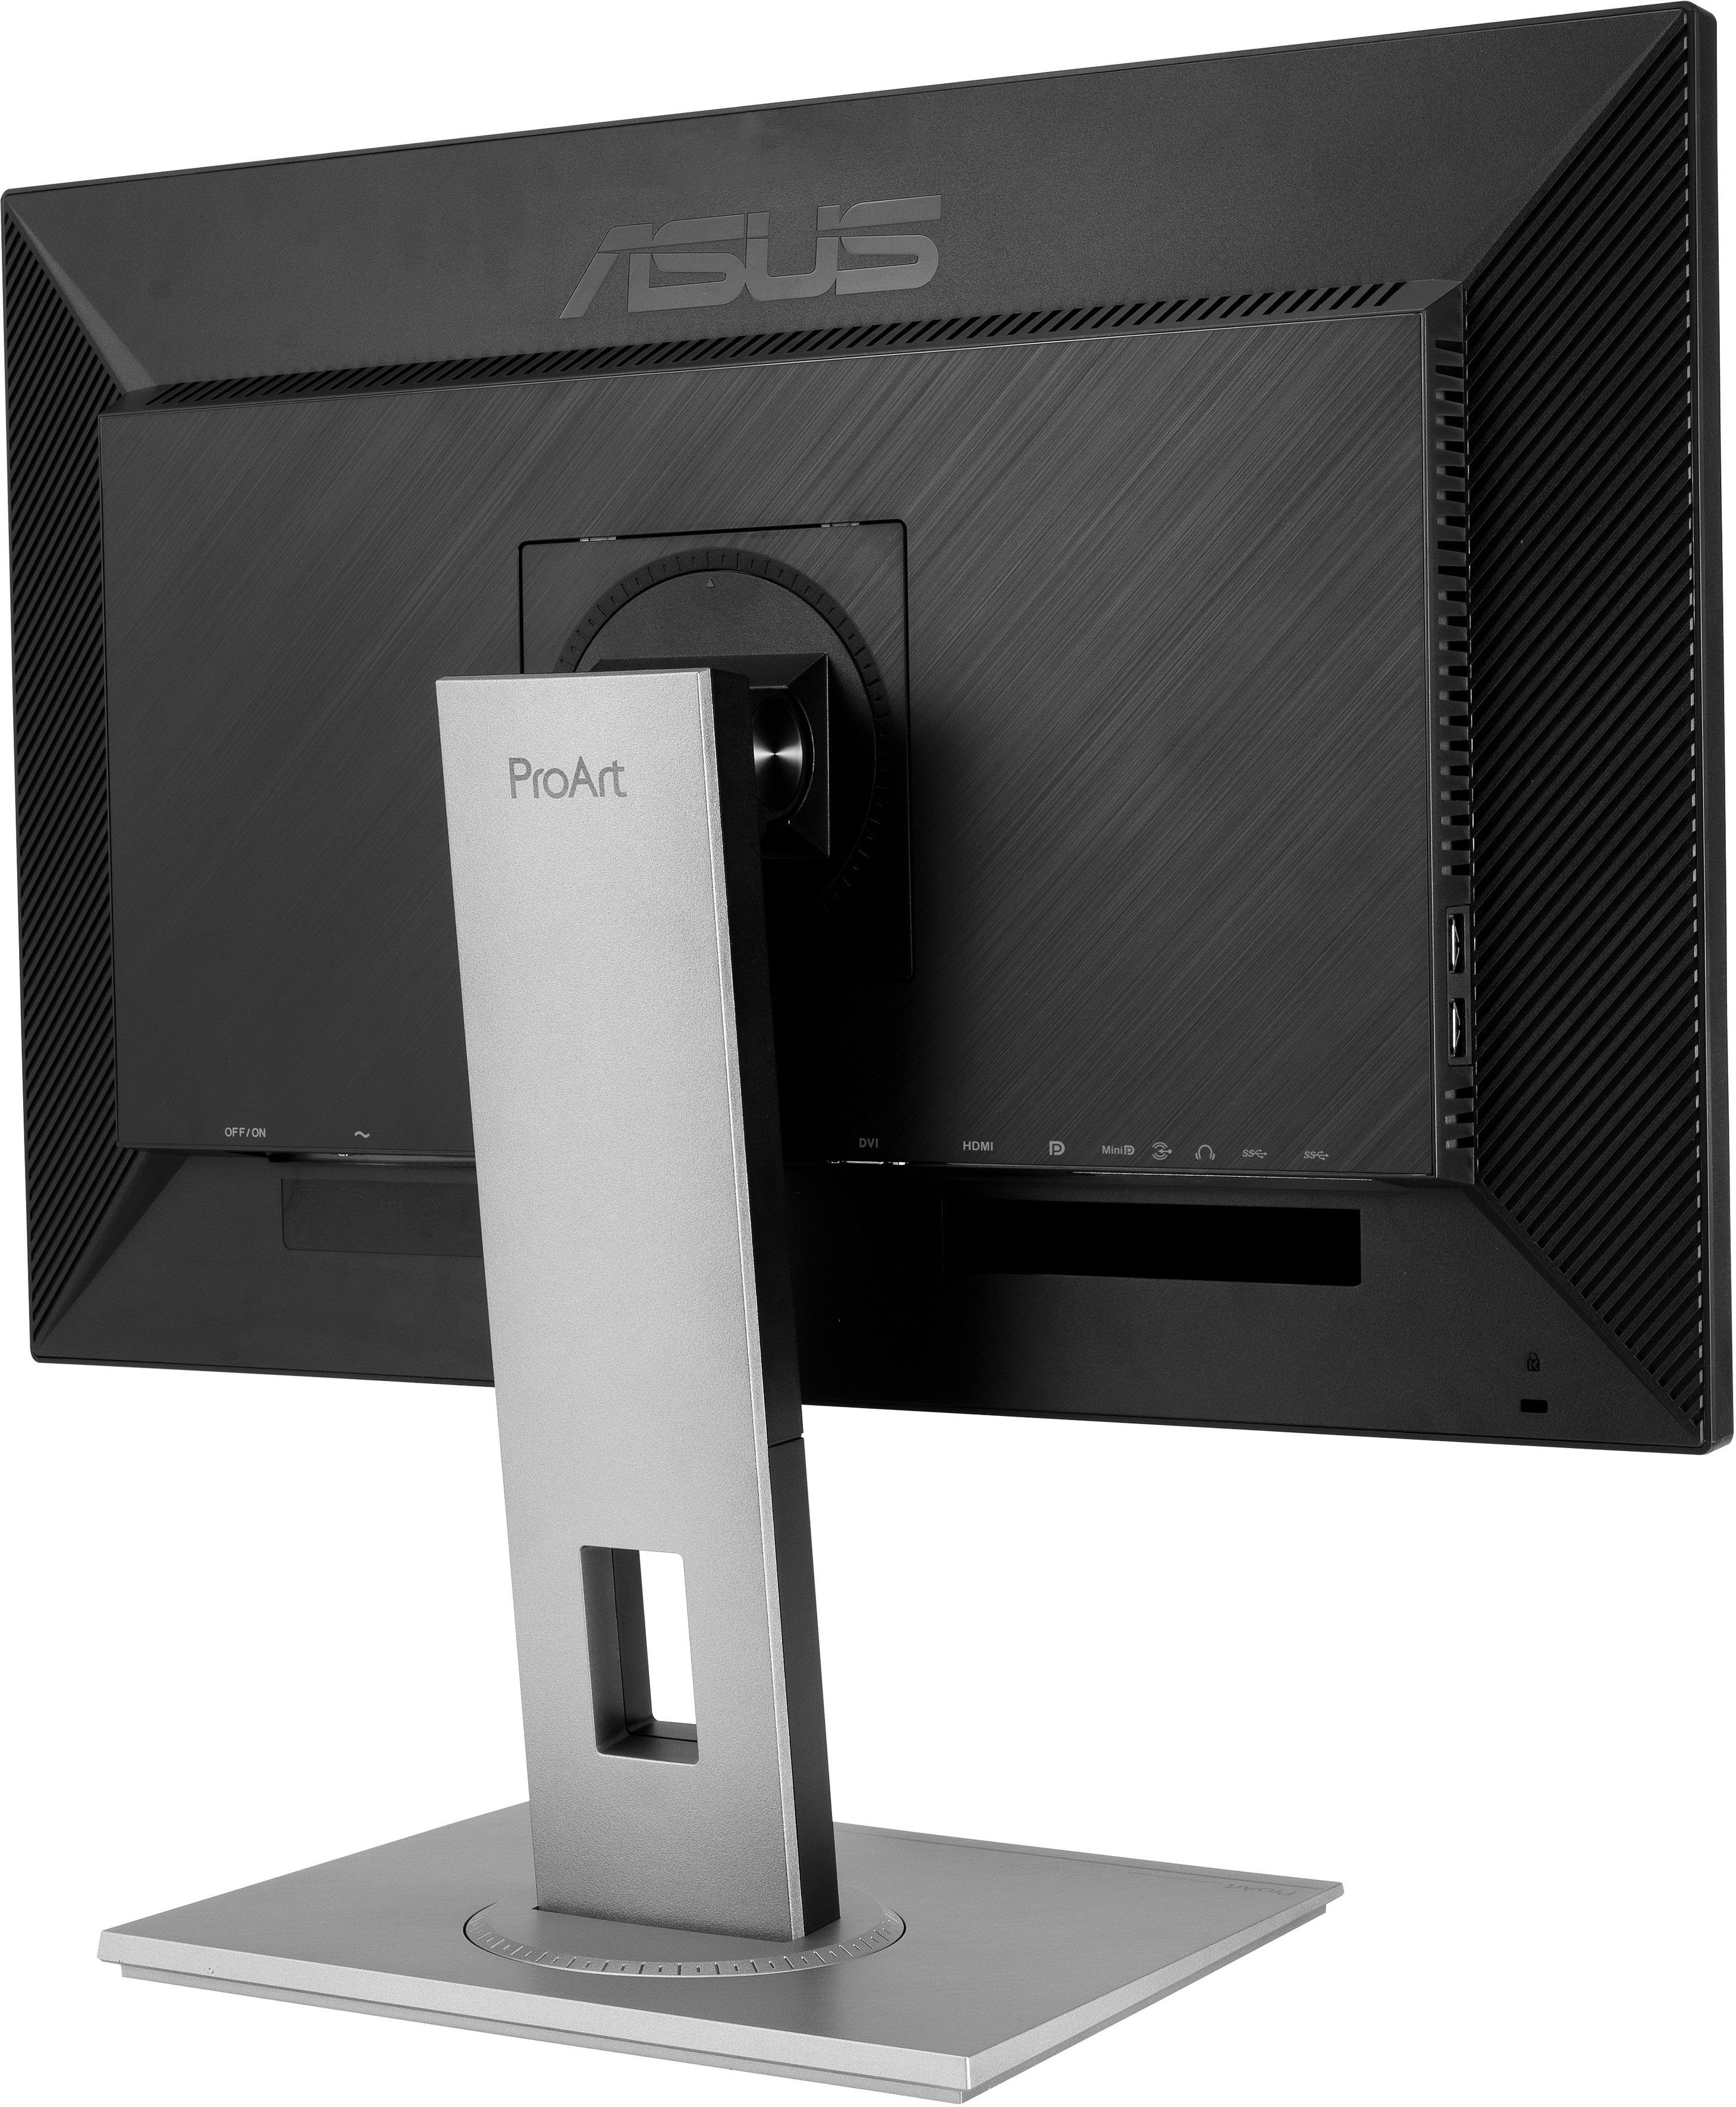 Asus PA278QV LED-Monitor 1440 cm/27 WQHD, 5 ms 2560 Reaktionszeit, x IPS) ", px, (68,58